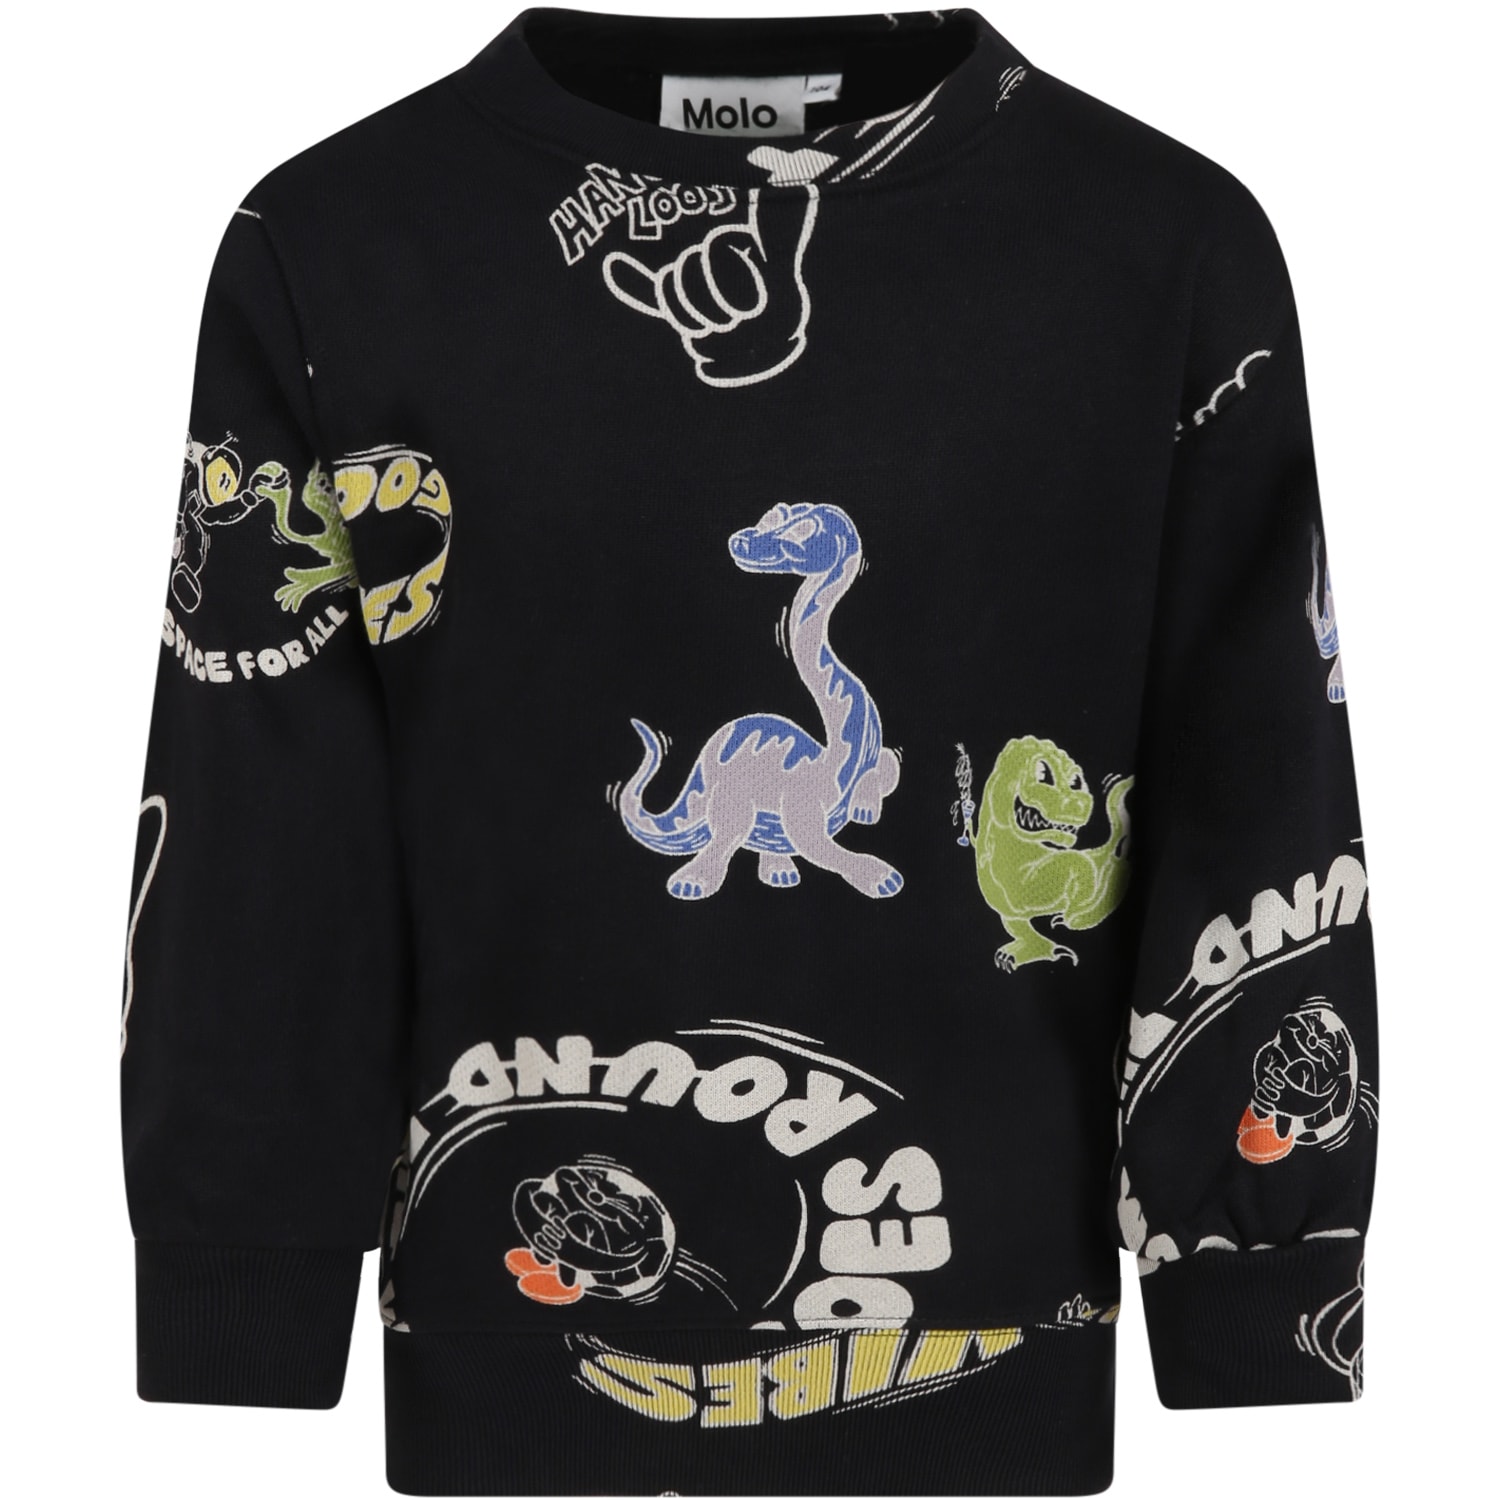 Molo Black Sweatshirt For Boy With Prints